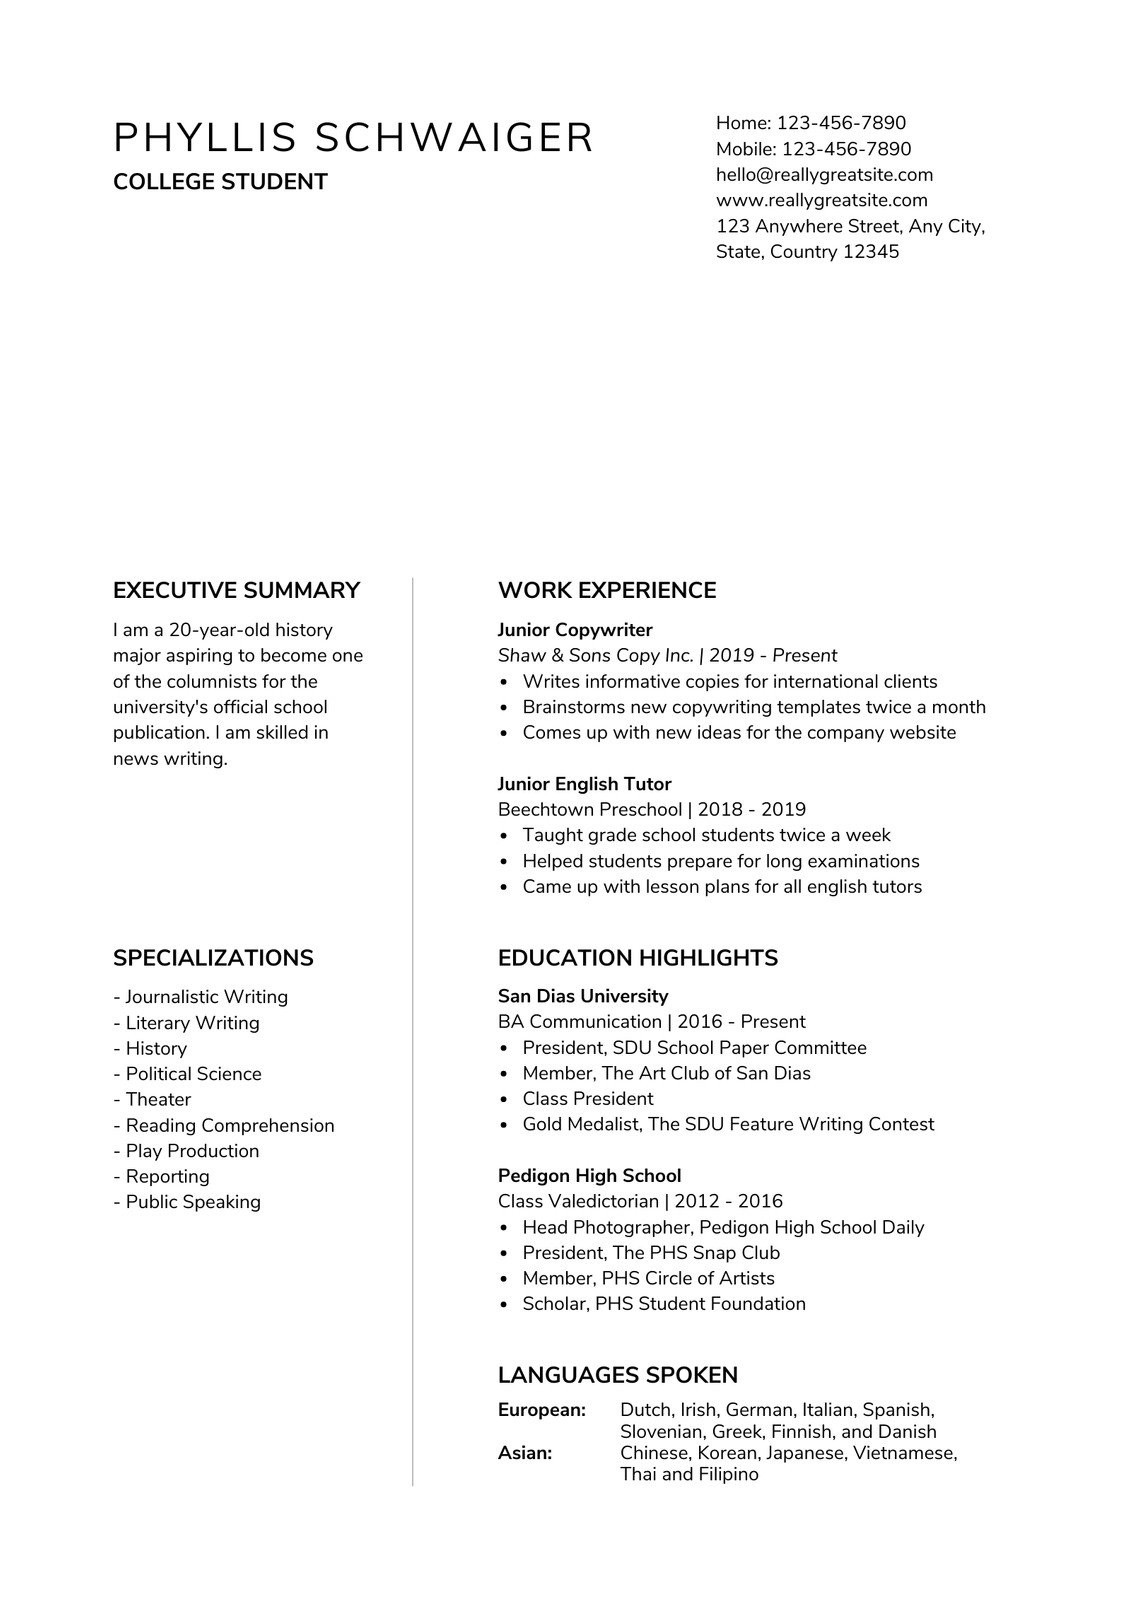 Free Recent College Graduate Resume Template Free Printable, Customizable College Resume Templates Canva